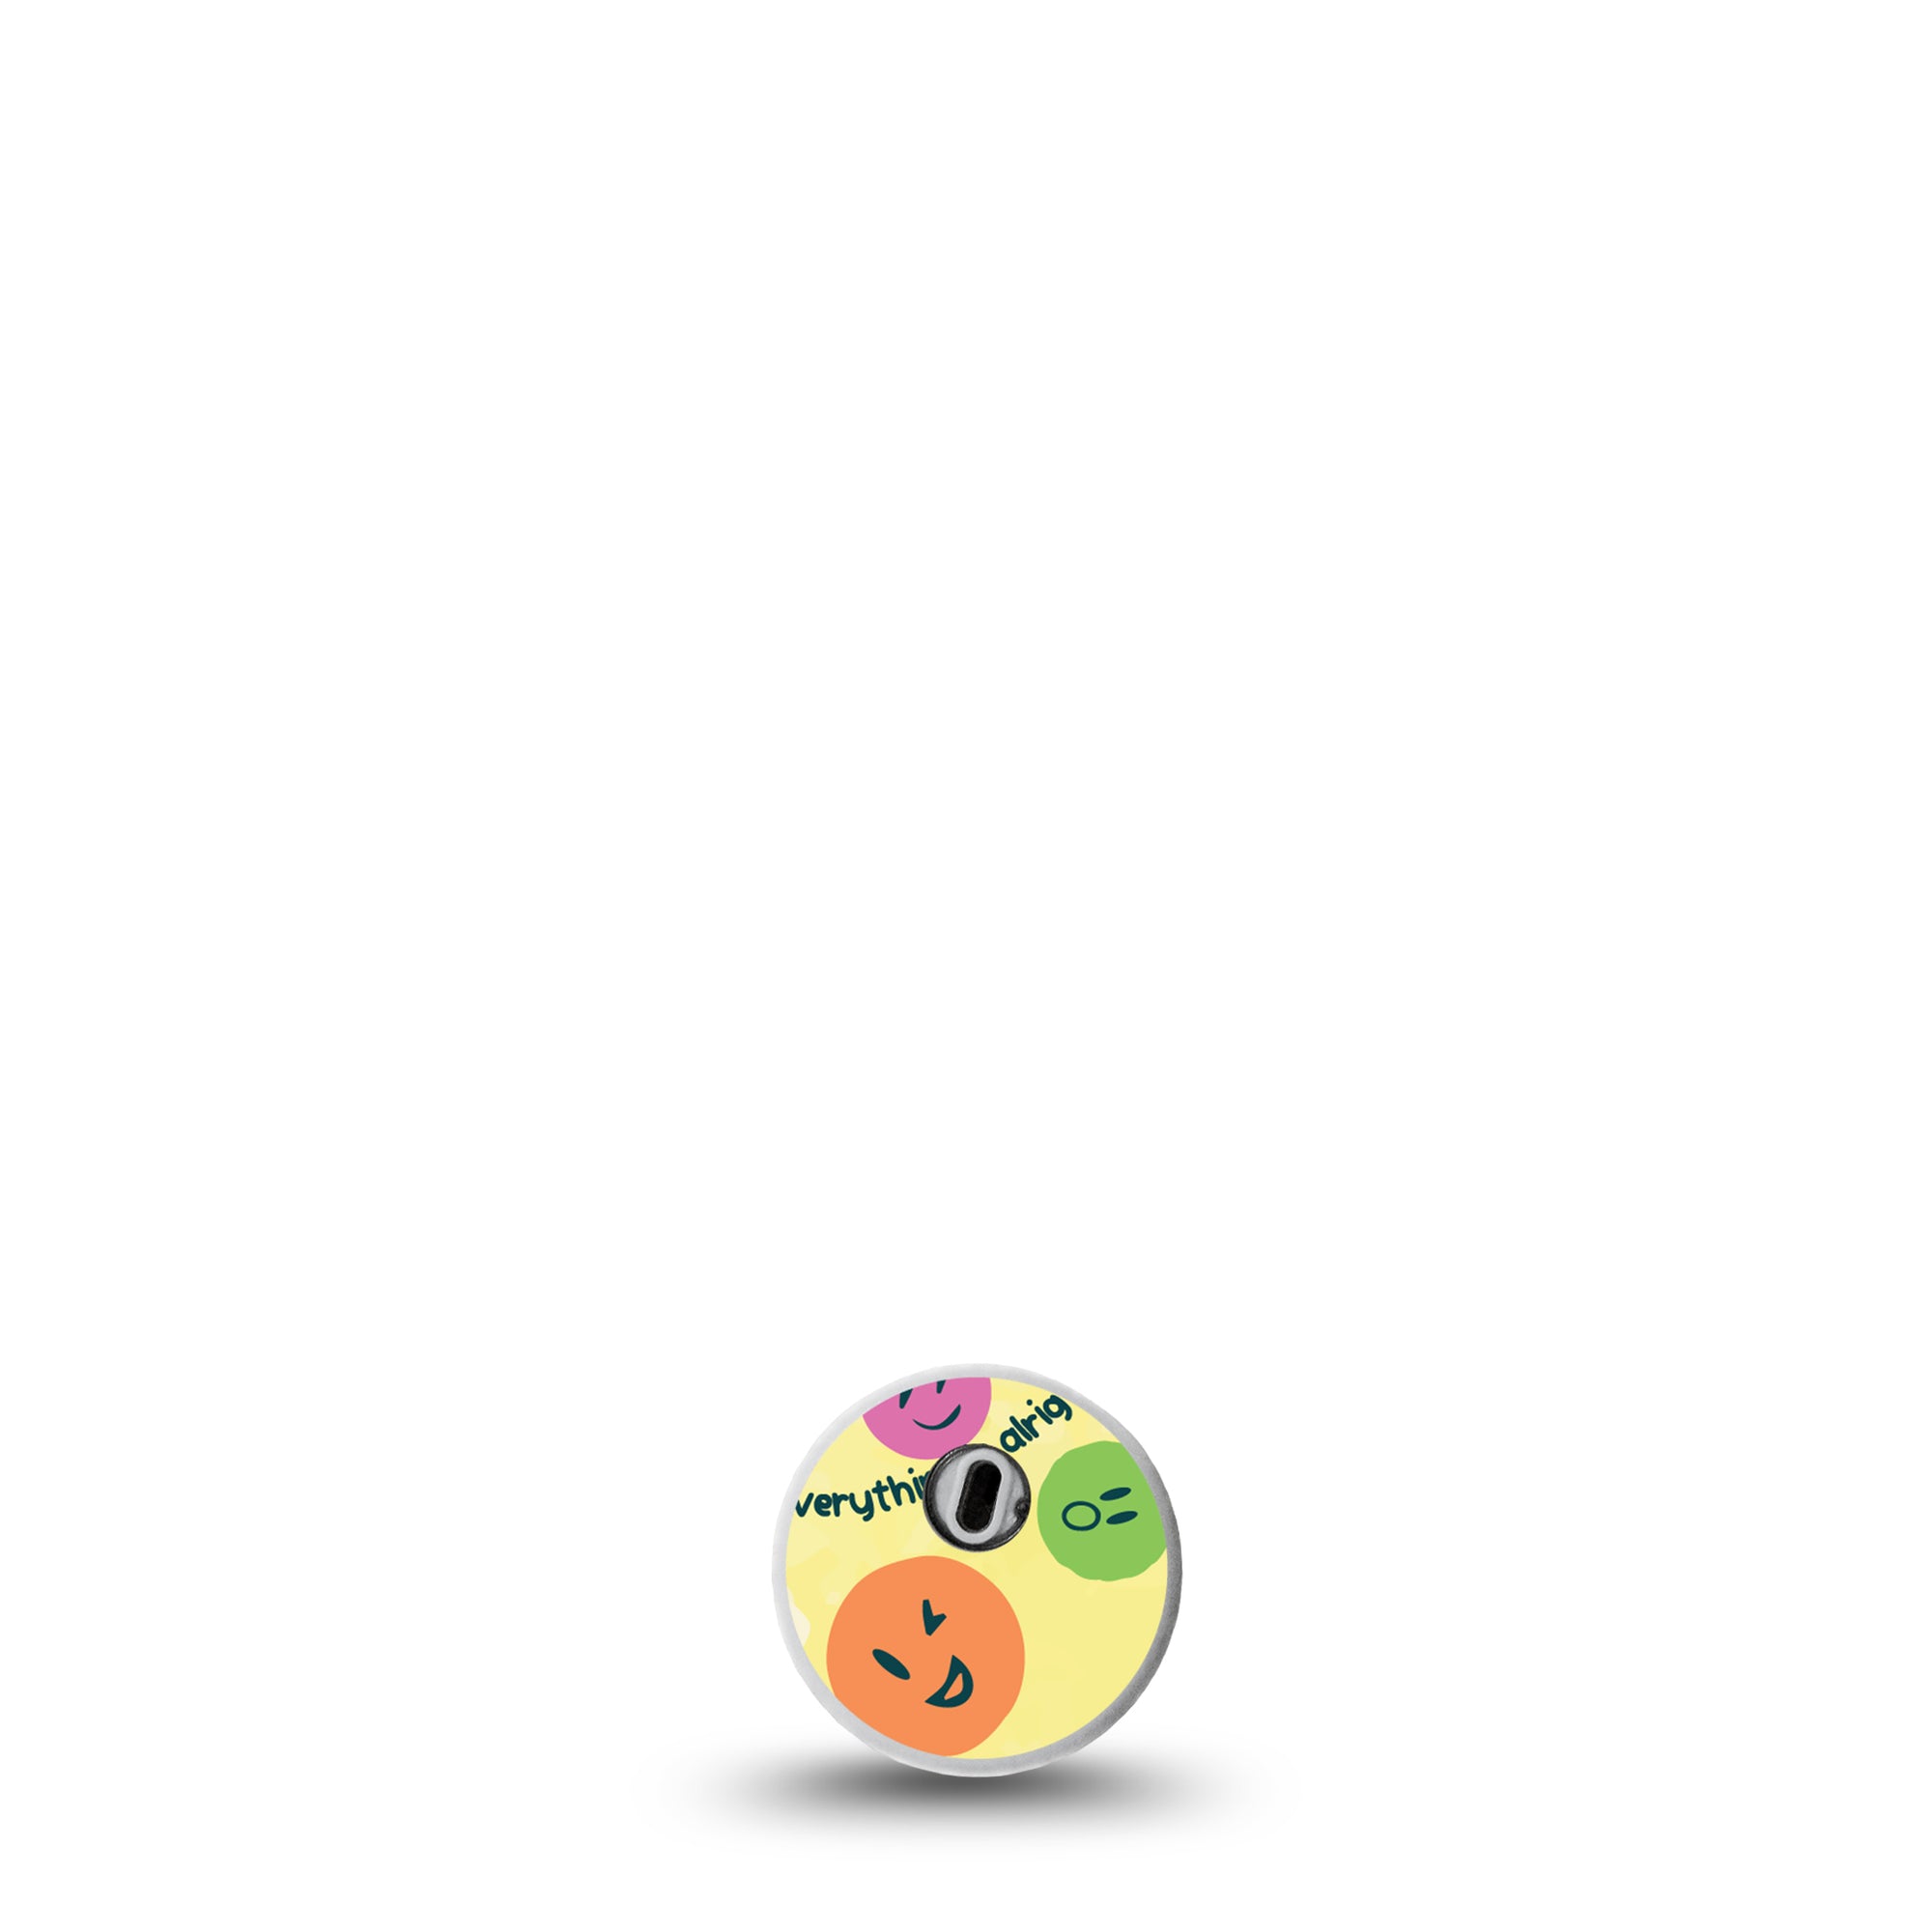 ExpressionMed Libre 3 Transmitter Sticker Colored Happy Emoji Pattern Themed Design - Center Sticker